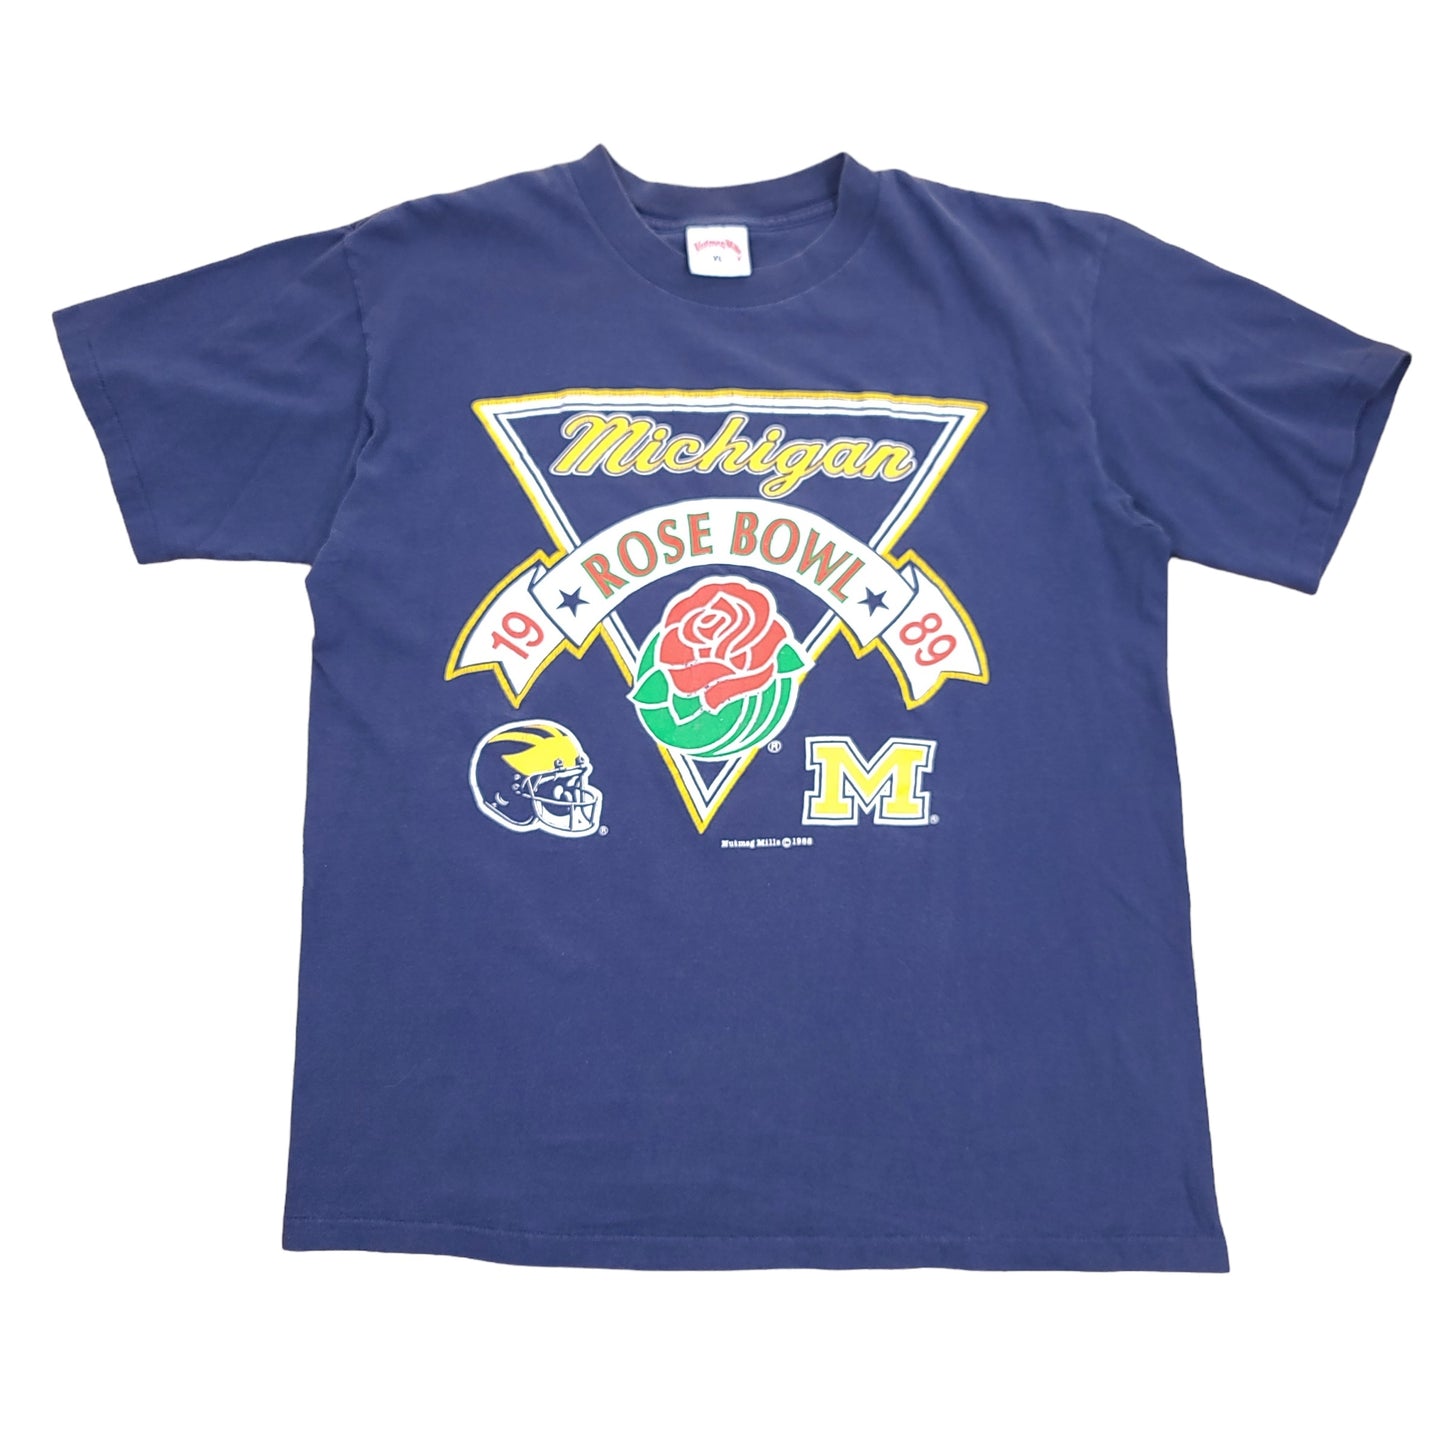 Vintage University of Michigan Wolverines 1989 Rosebowl Football Shirt